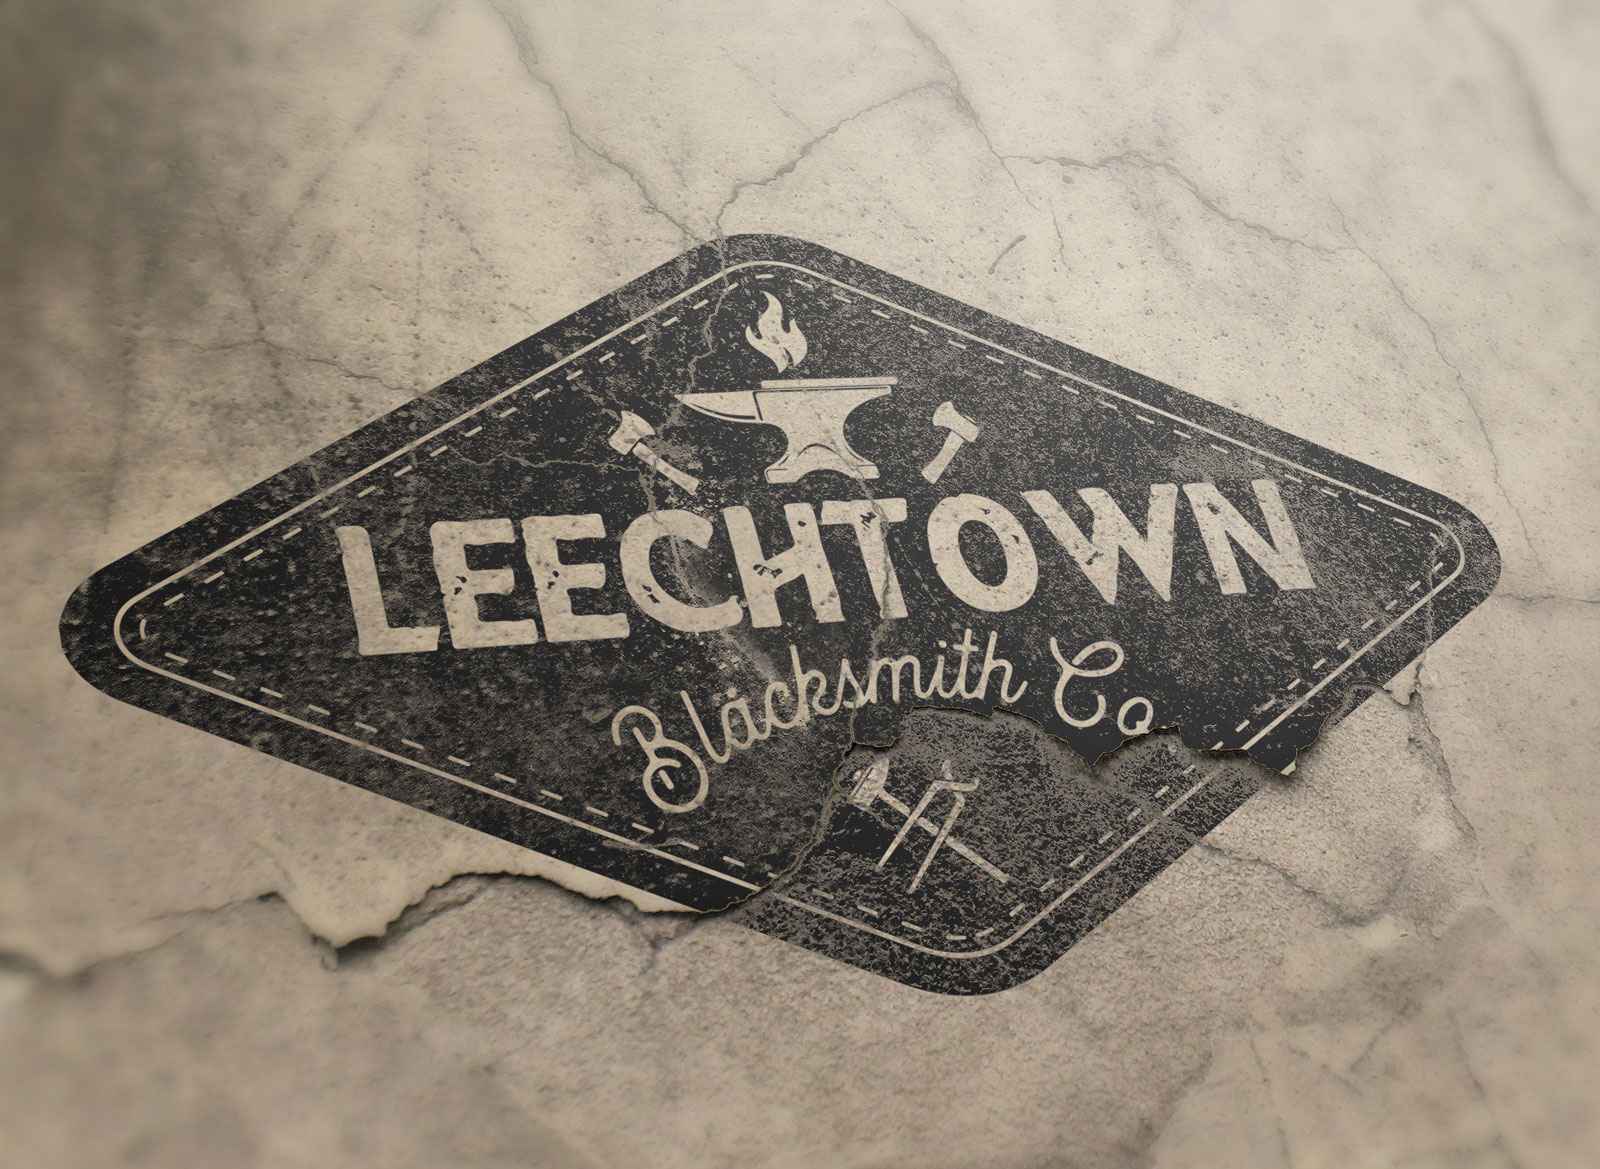 Leechtown Blacksmith Co.